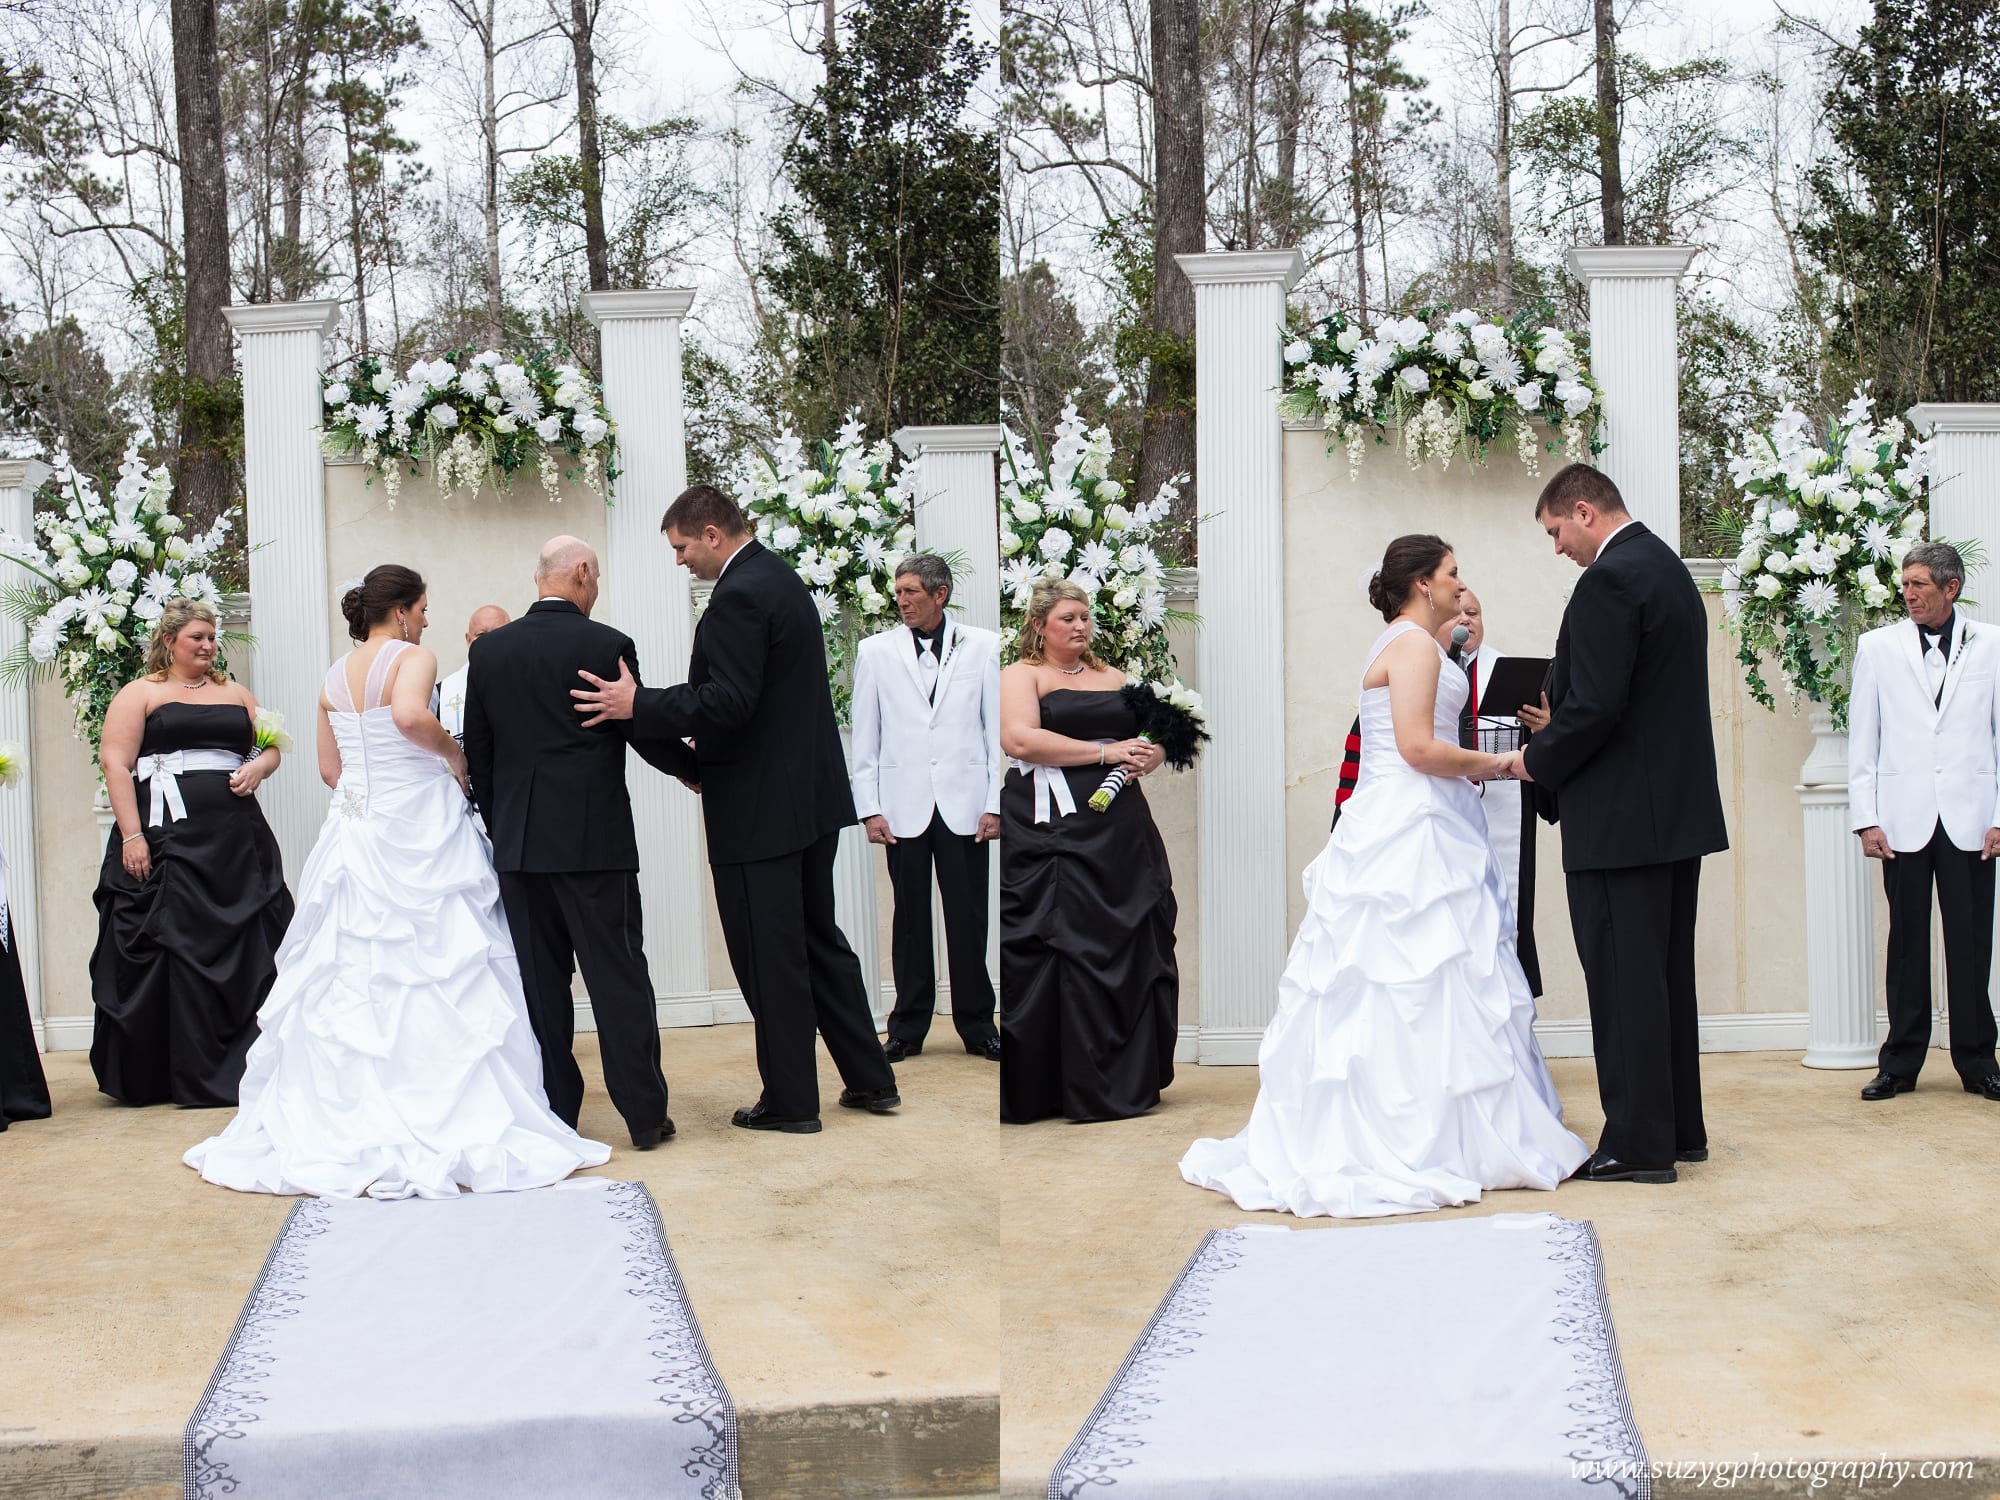 suzy g-louisiana castle-franklington louisiana- texas-mississippi-wedding photography-weddings-suzygphotography_0020